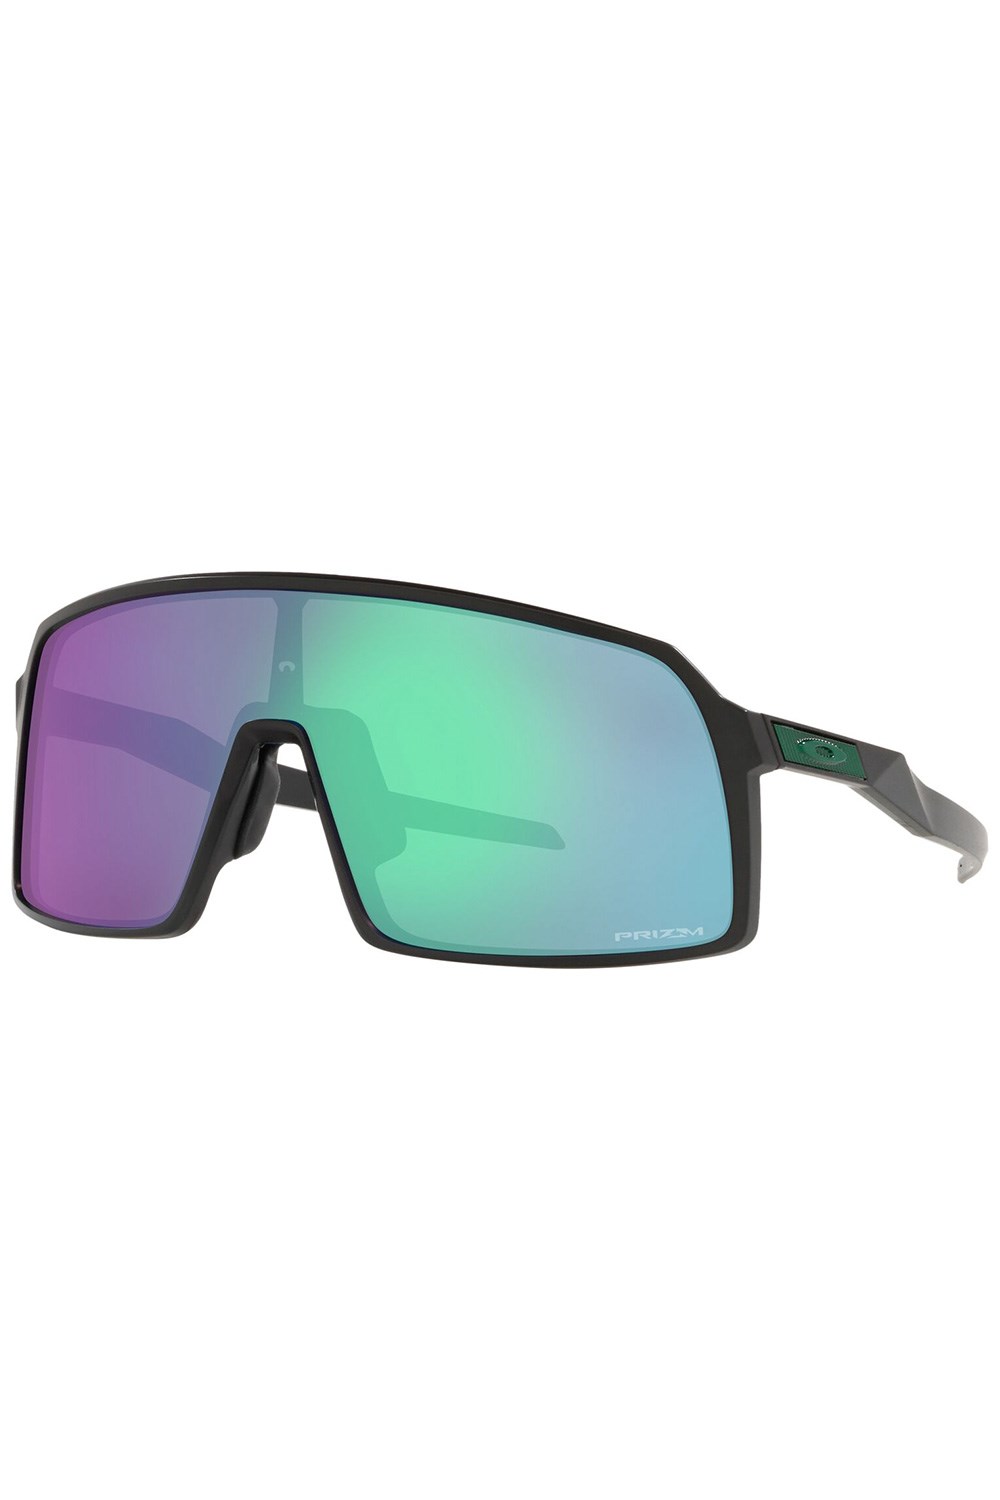 Sutro Unisex Cycling Sunglasses -